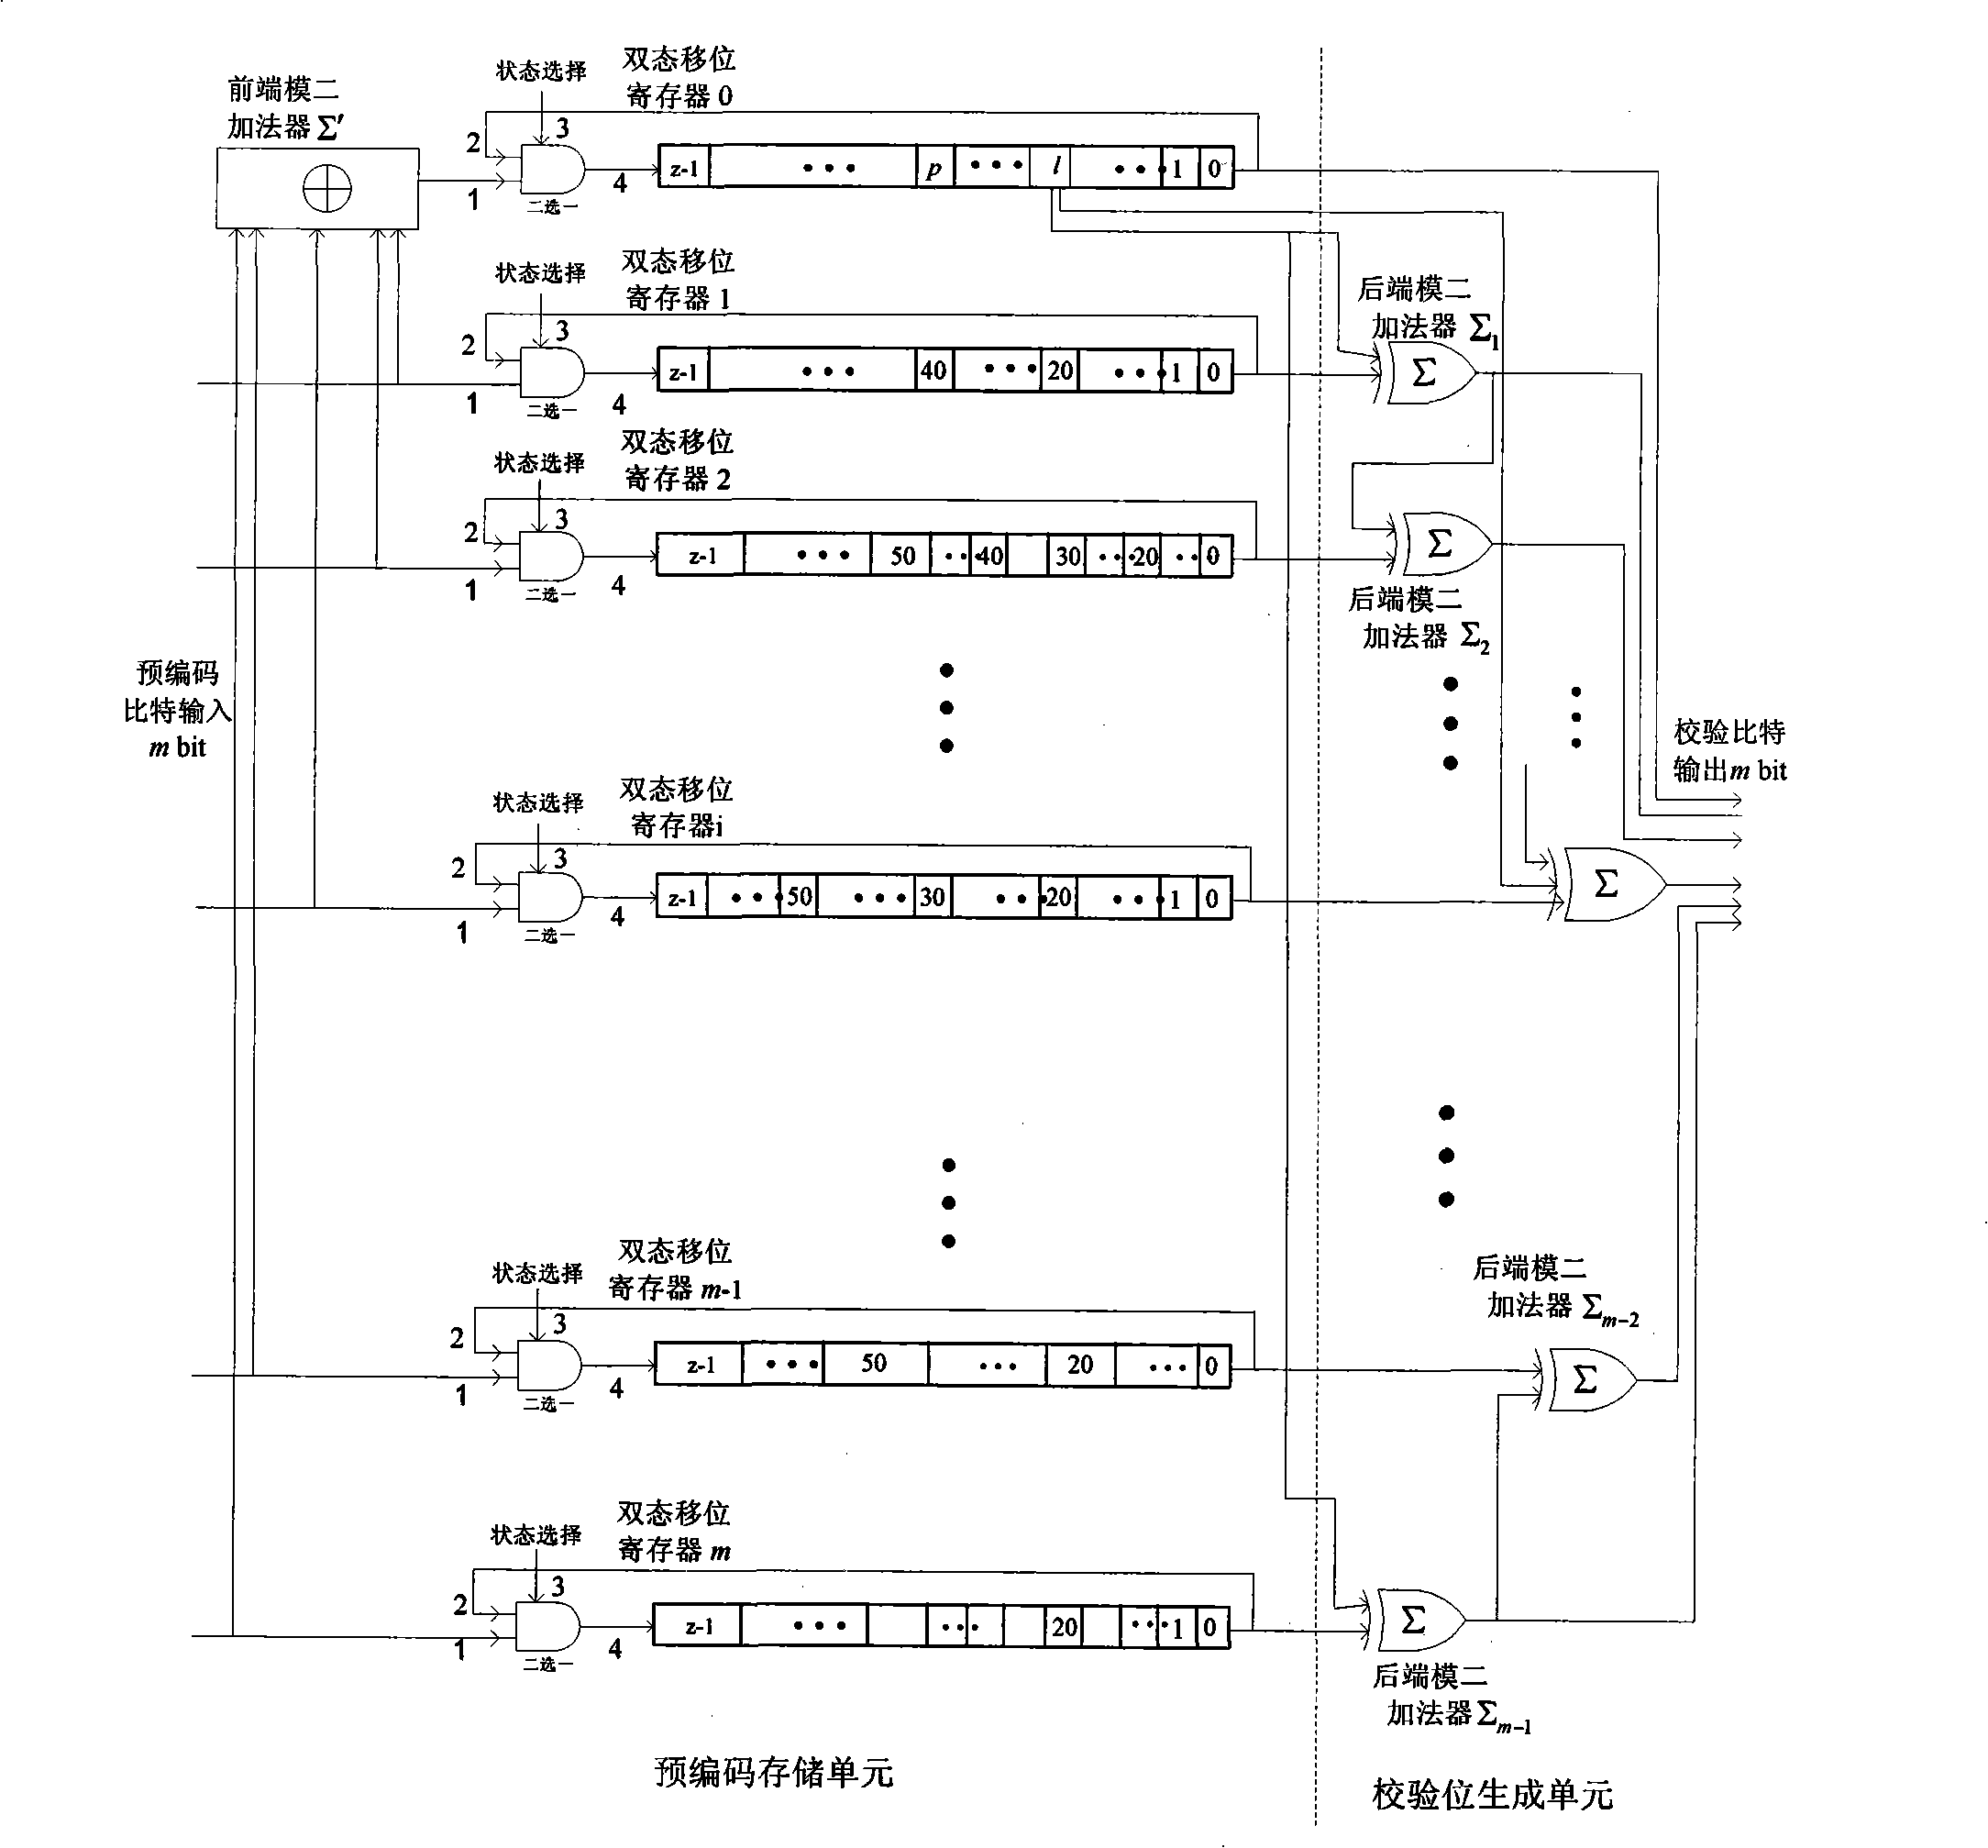 Generator for check bit of quasi-cyclic shift low-density check code base on bi-diagonal